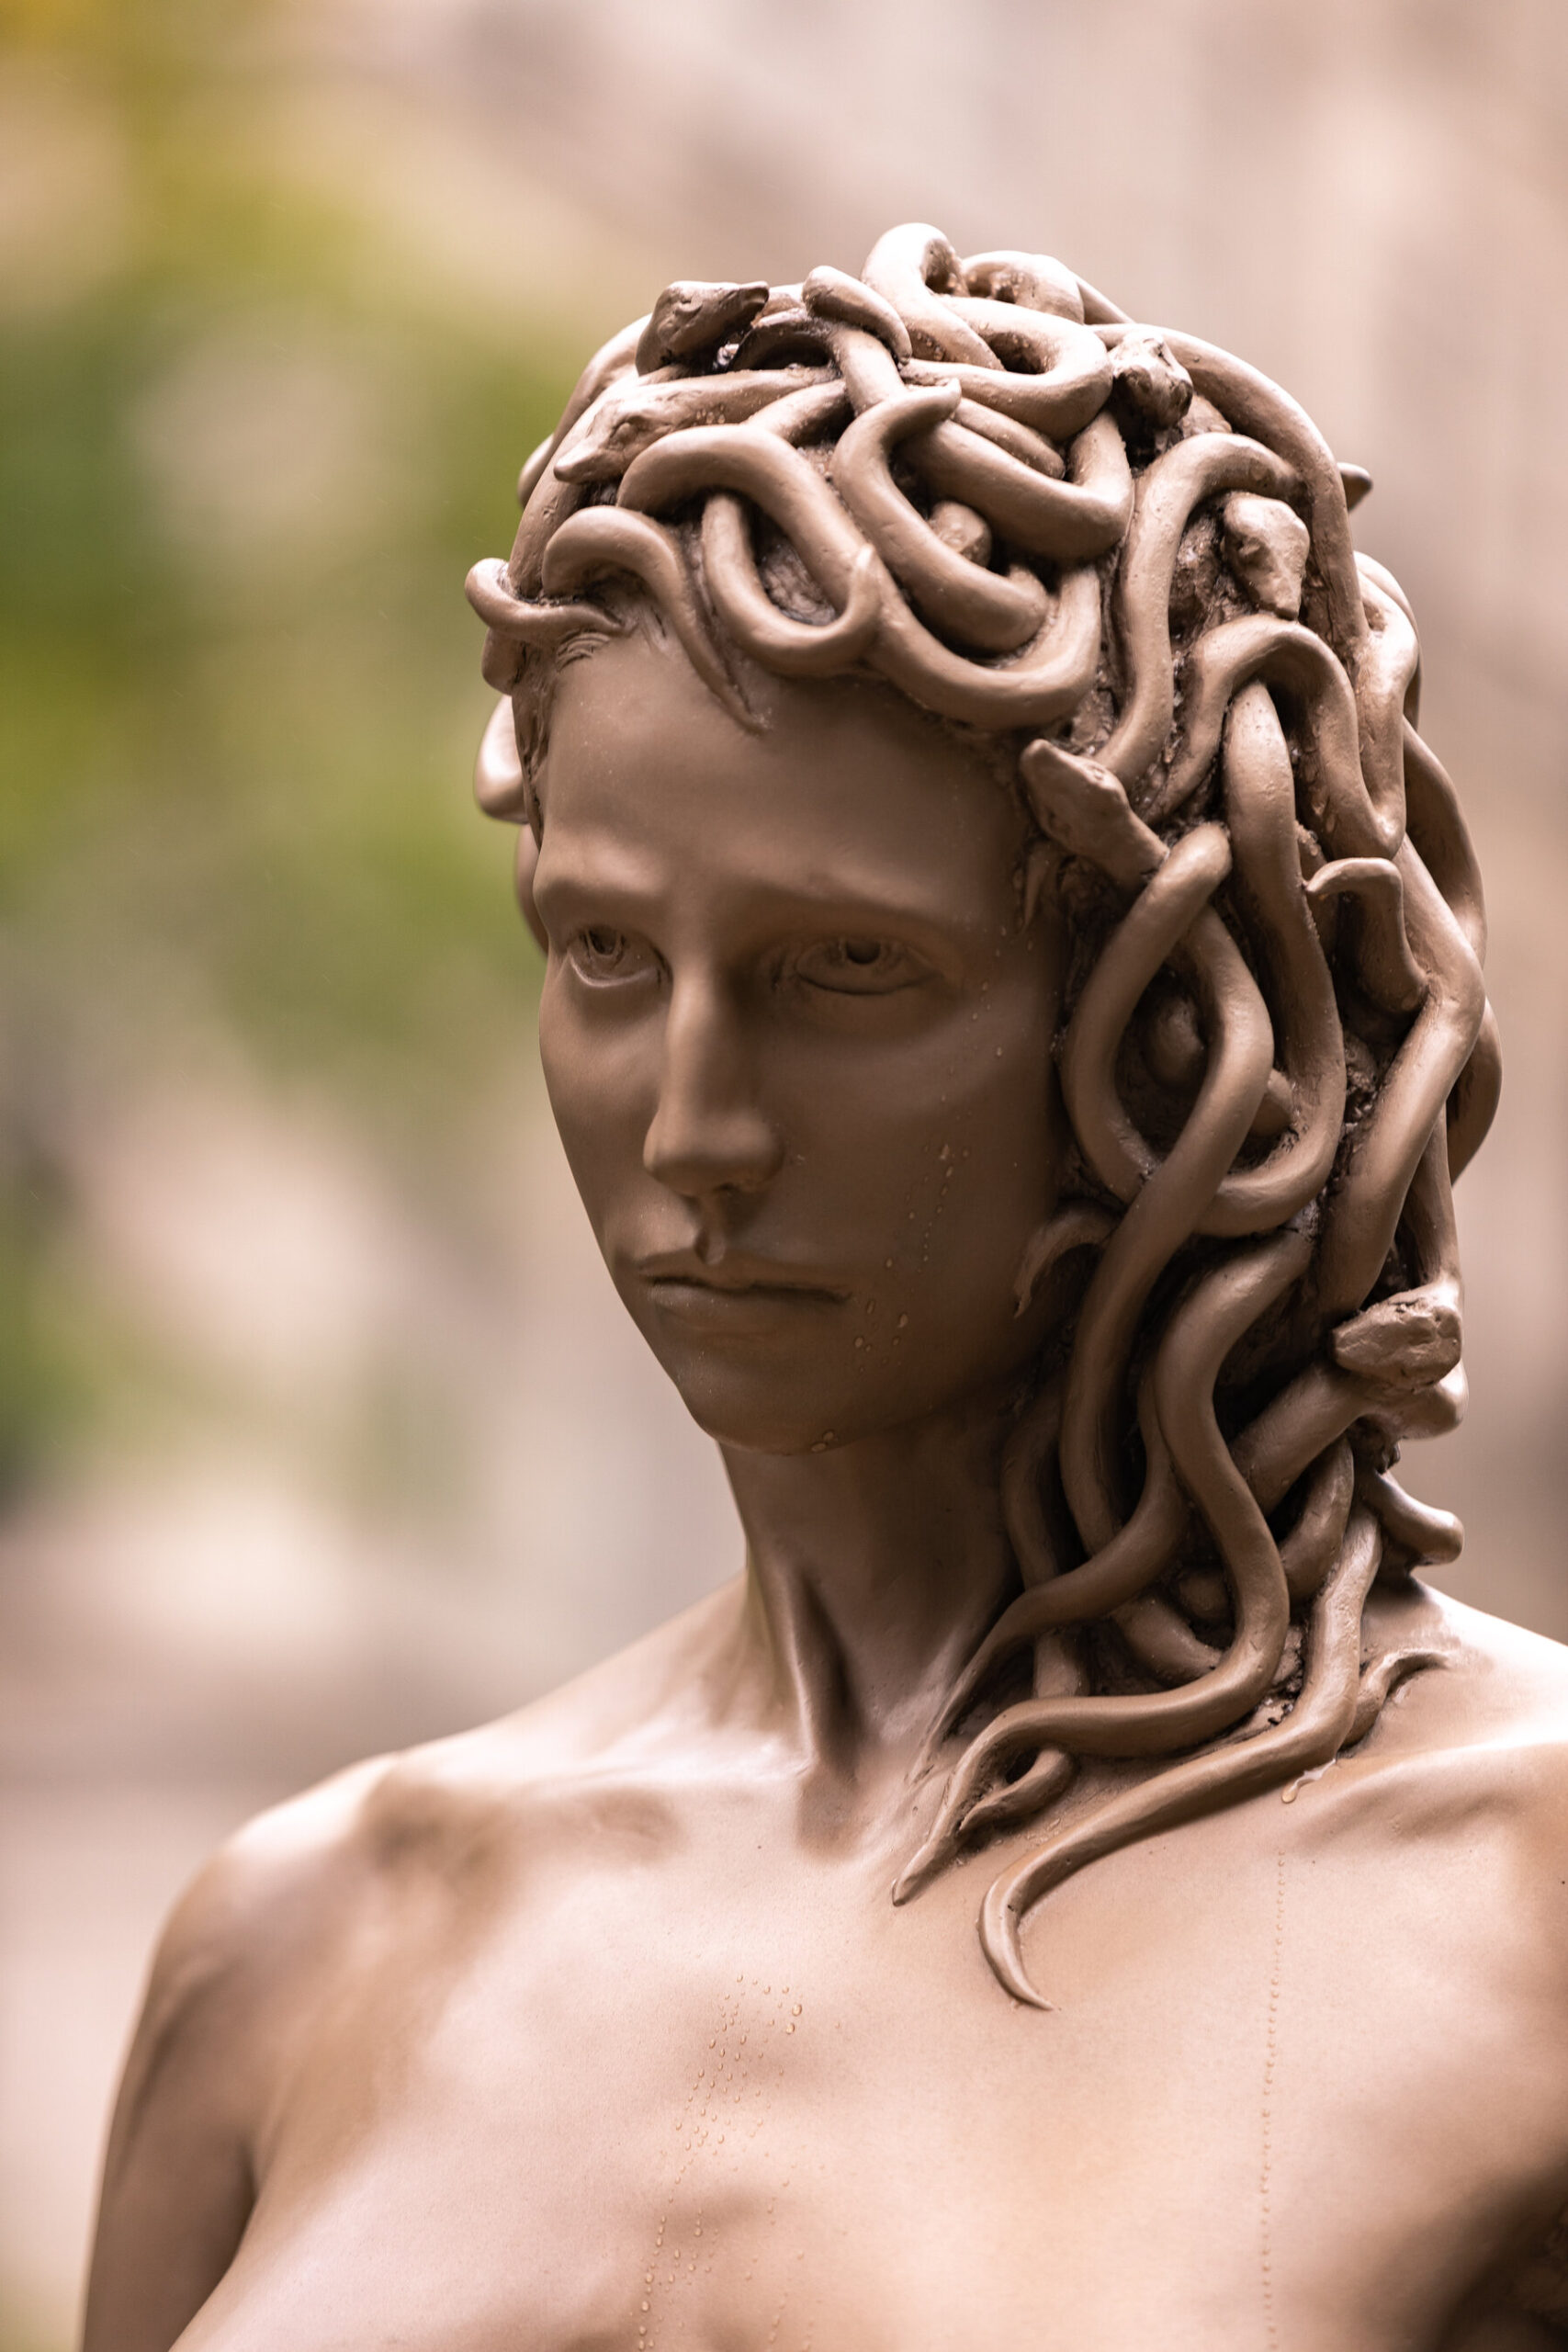 #medusa #greece #mythology #statue #feminism Archives - My TJ Now